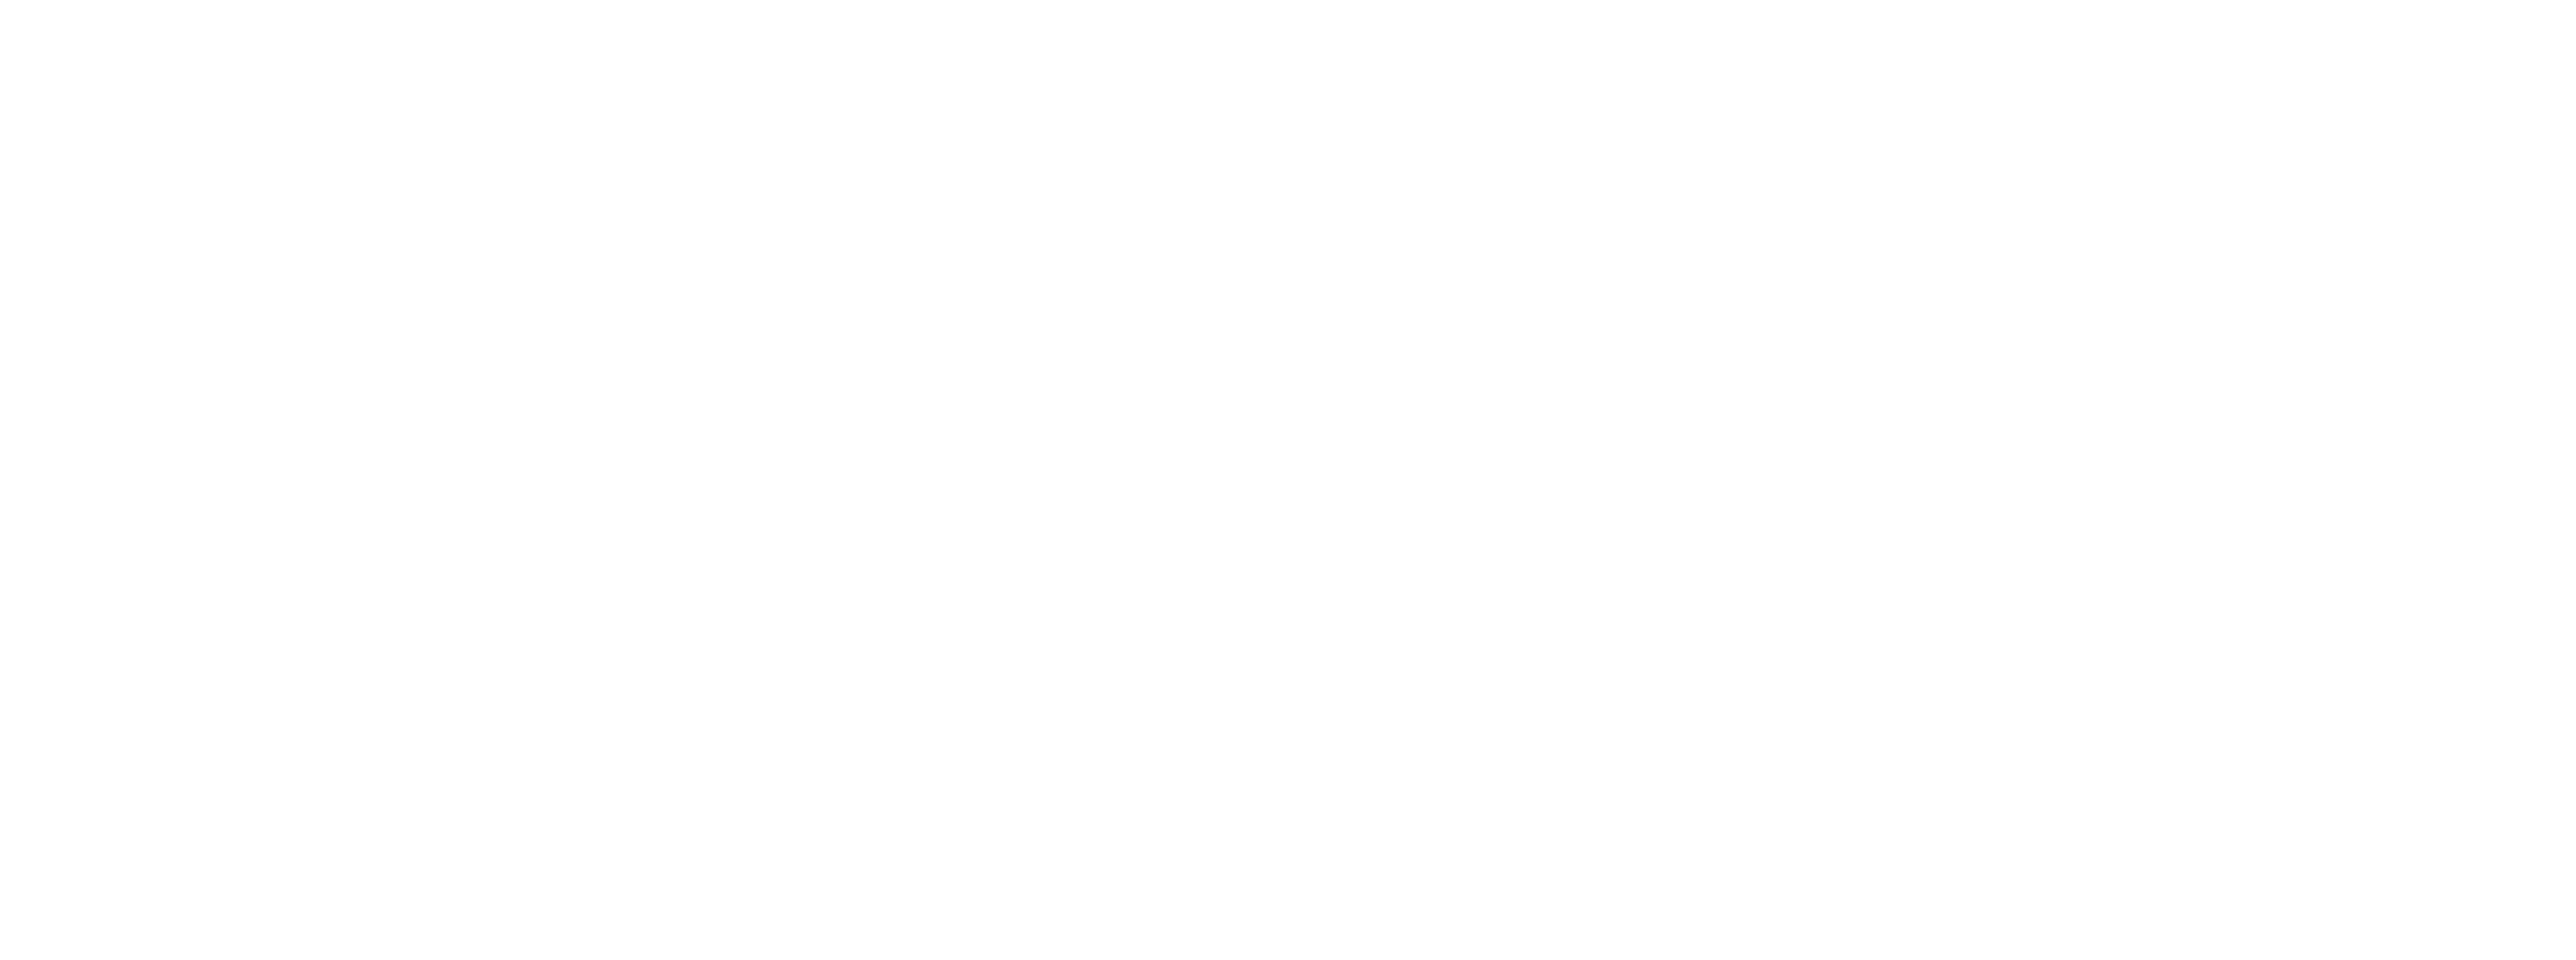 Semmelweis Museum logo